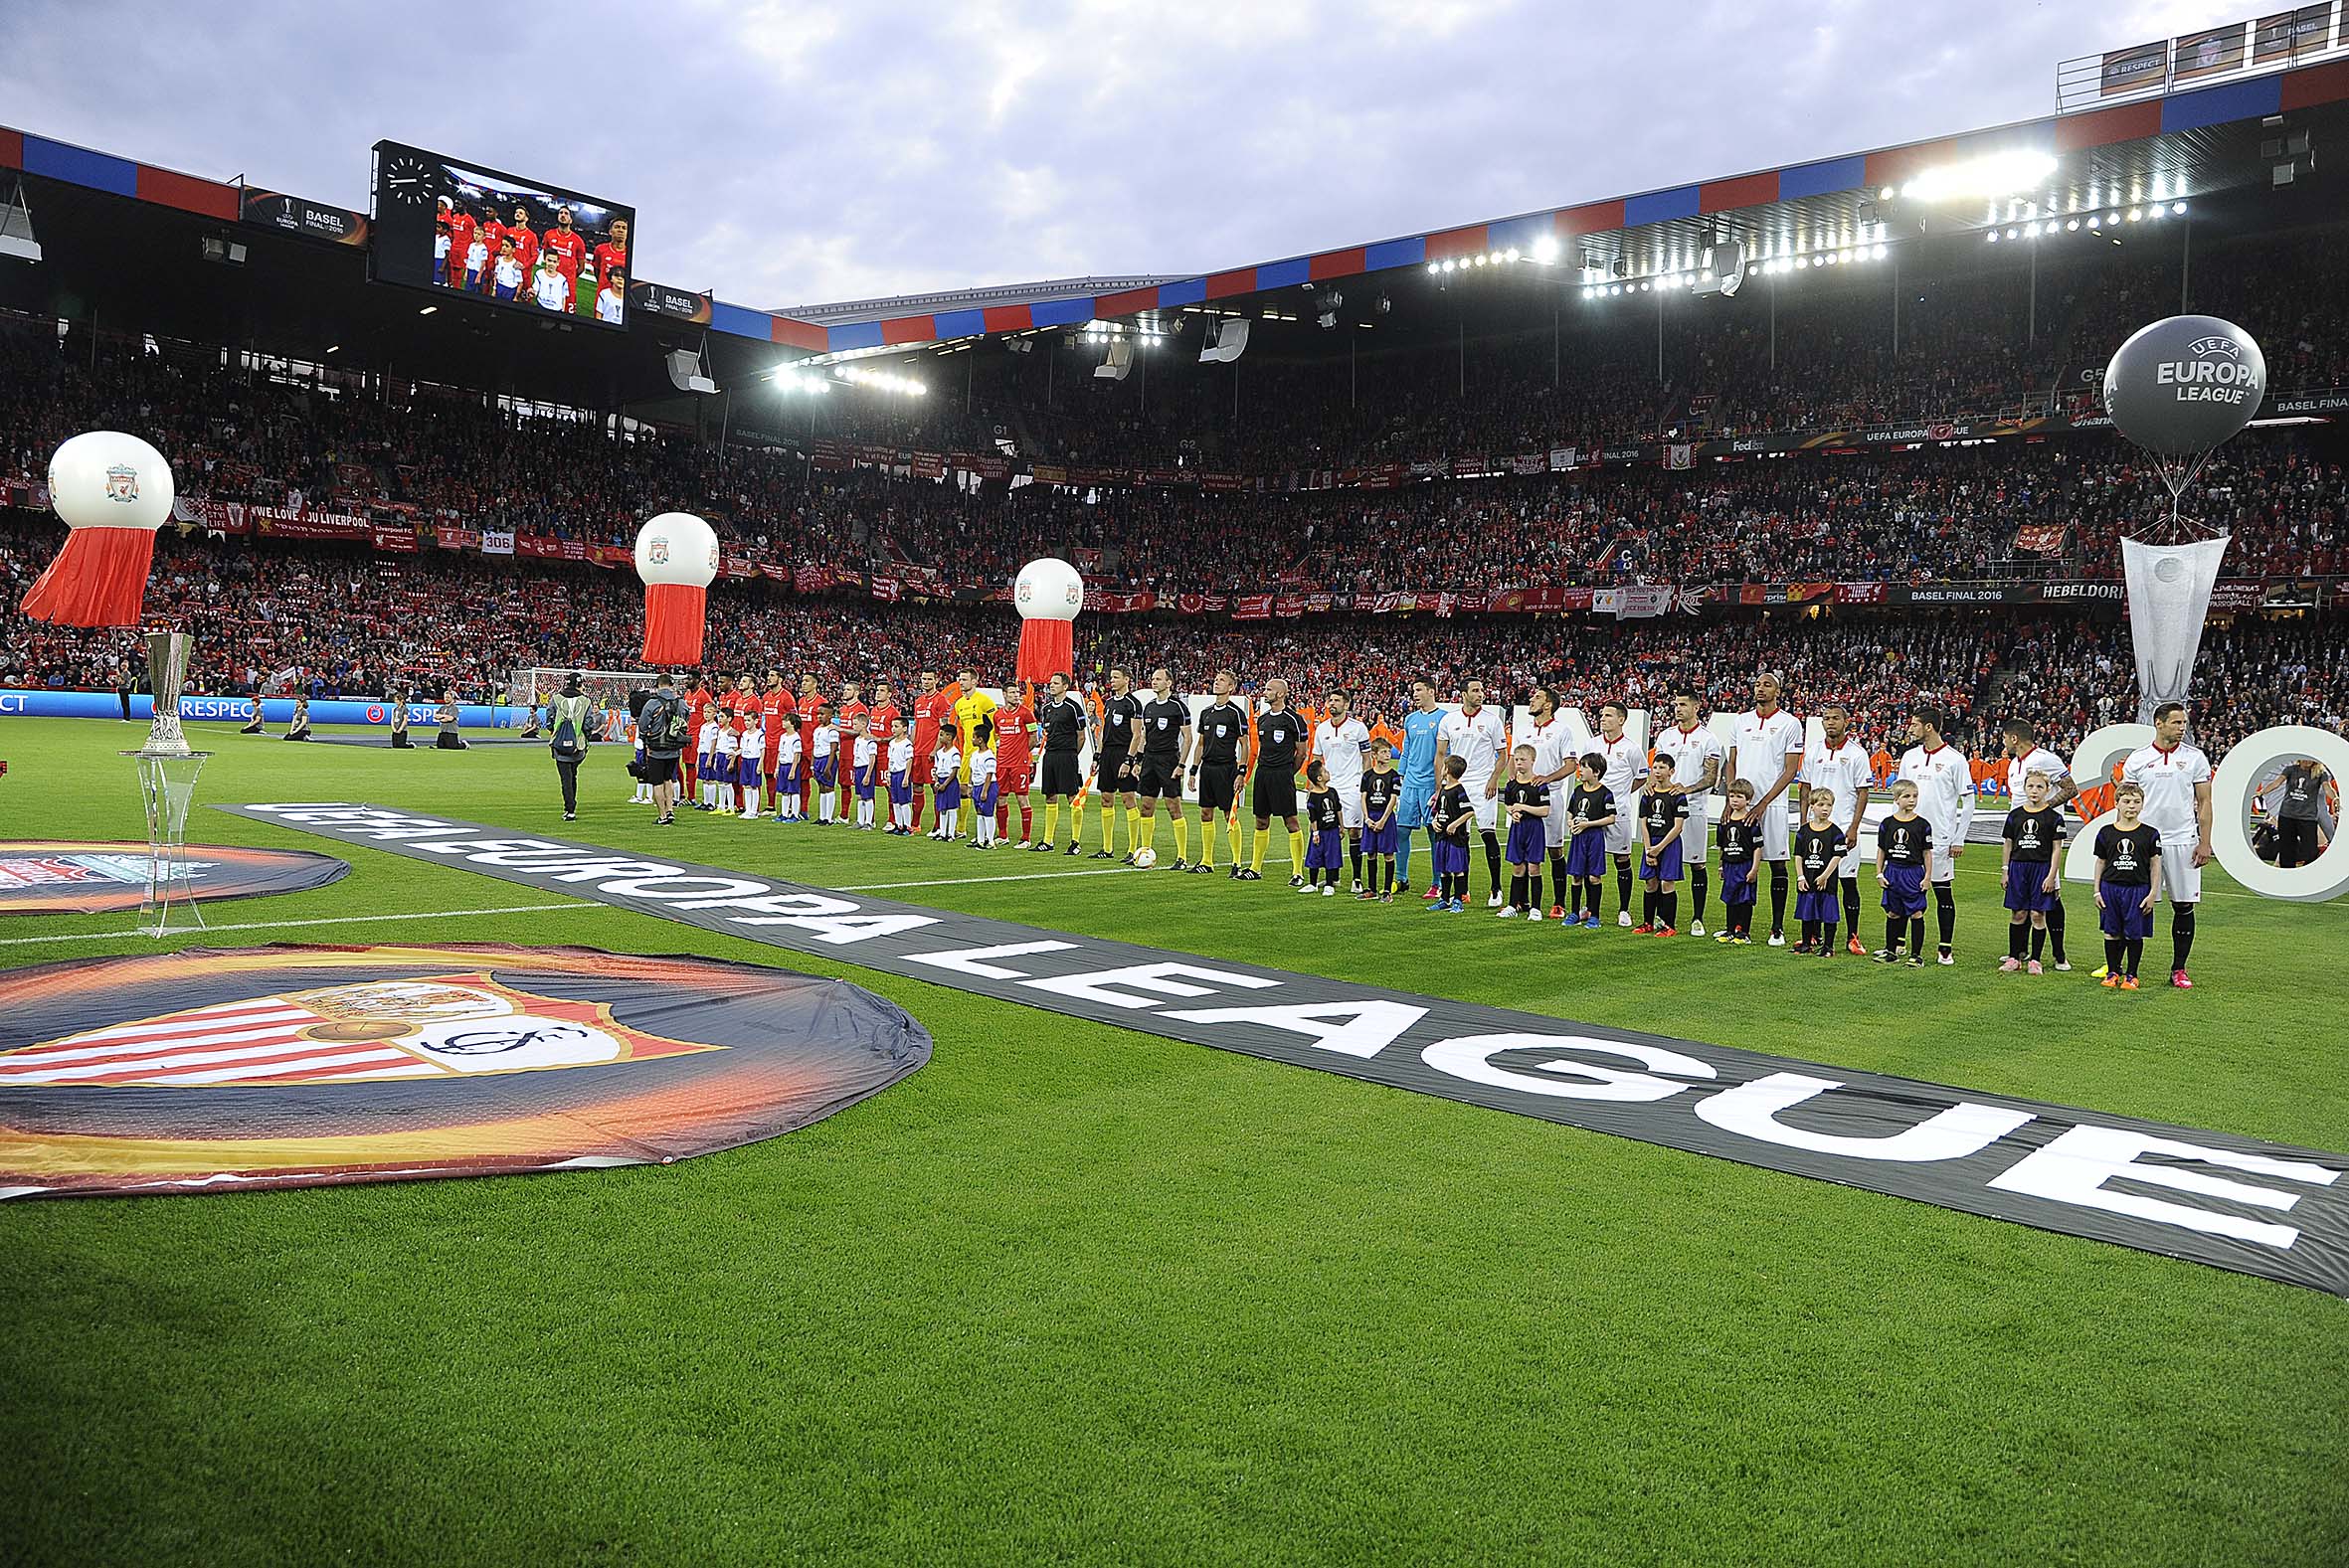 Inicio de la final de la UEFA Europa League Liverpool FC-Sevilla FC